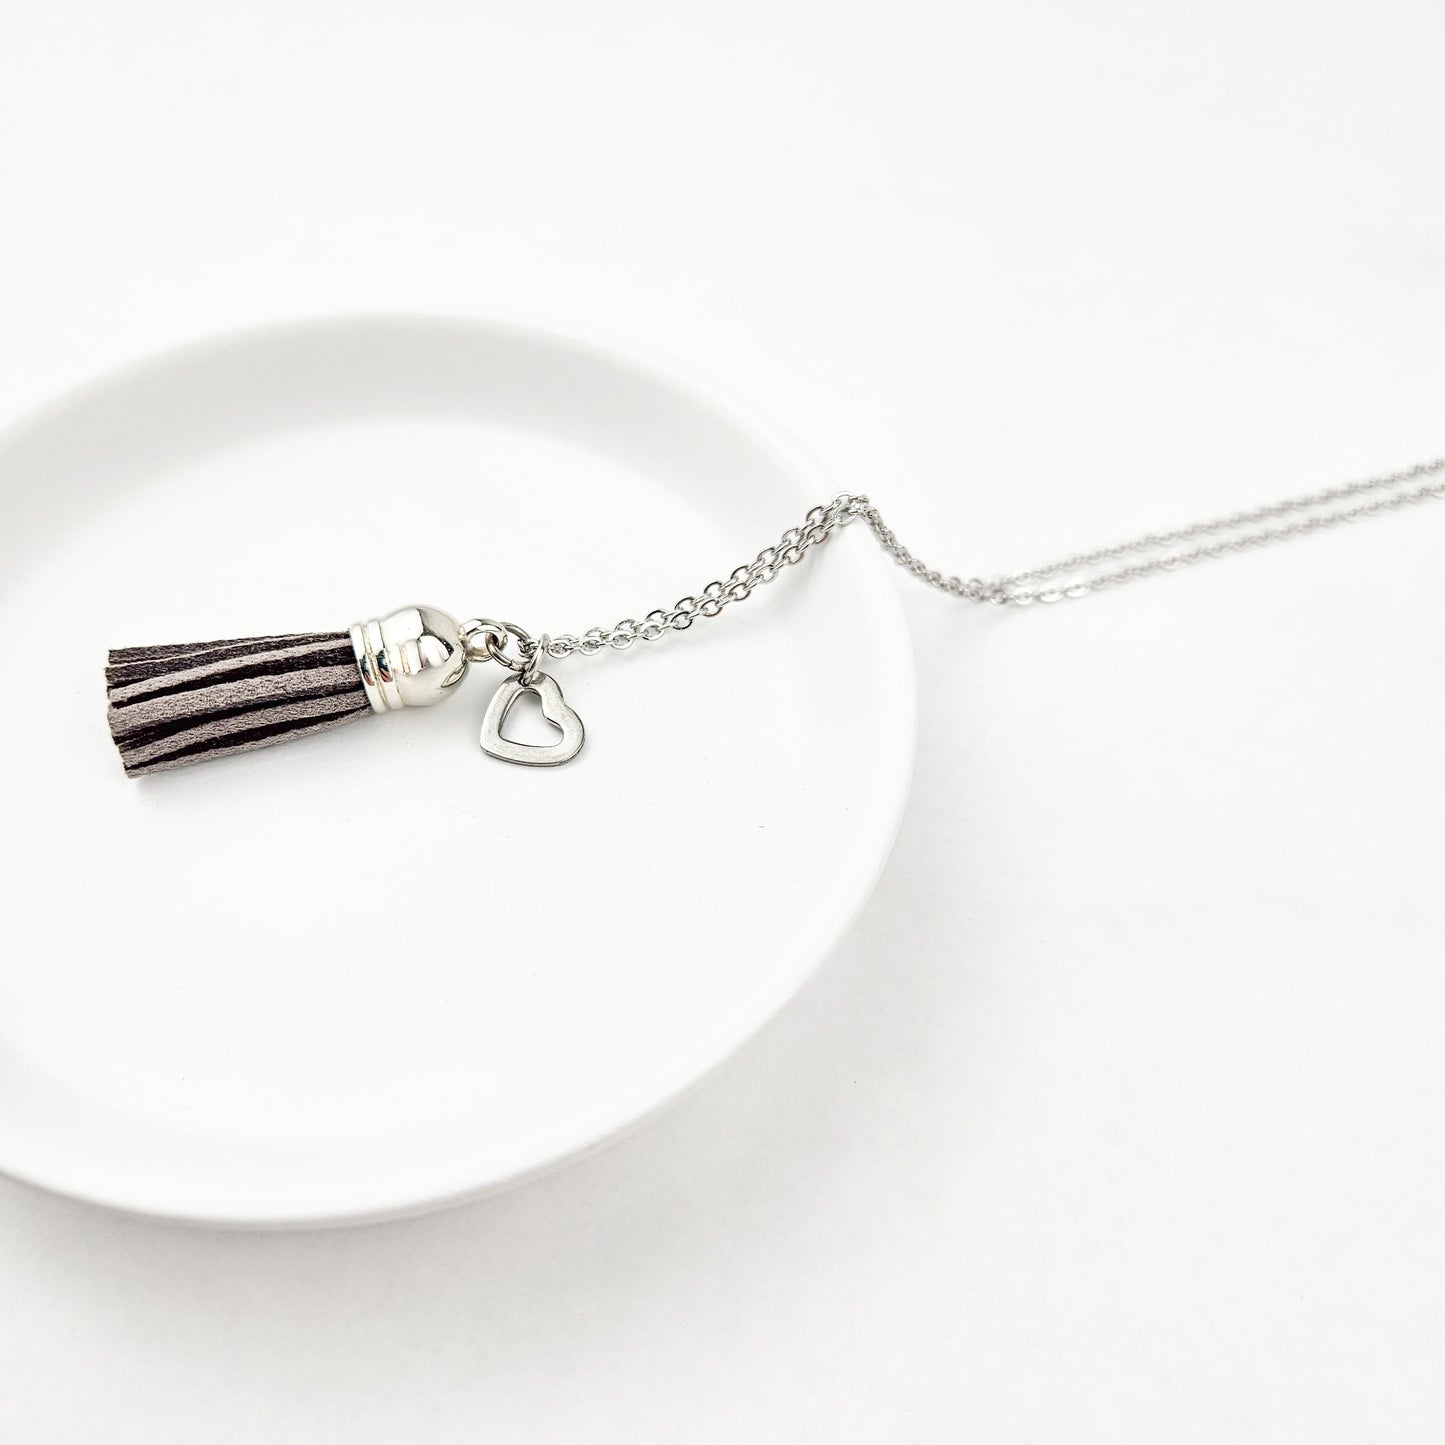 Child&#39;s Tassel + Charm Essential Oil Diffuser Necklace